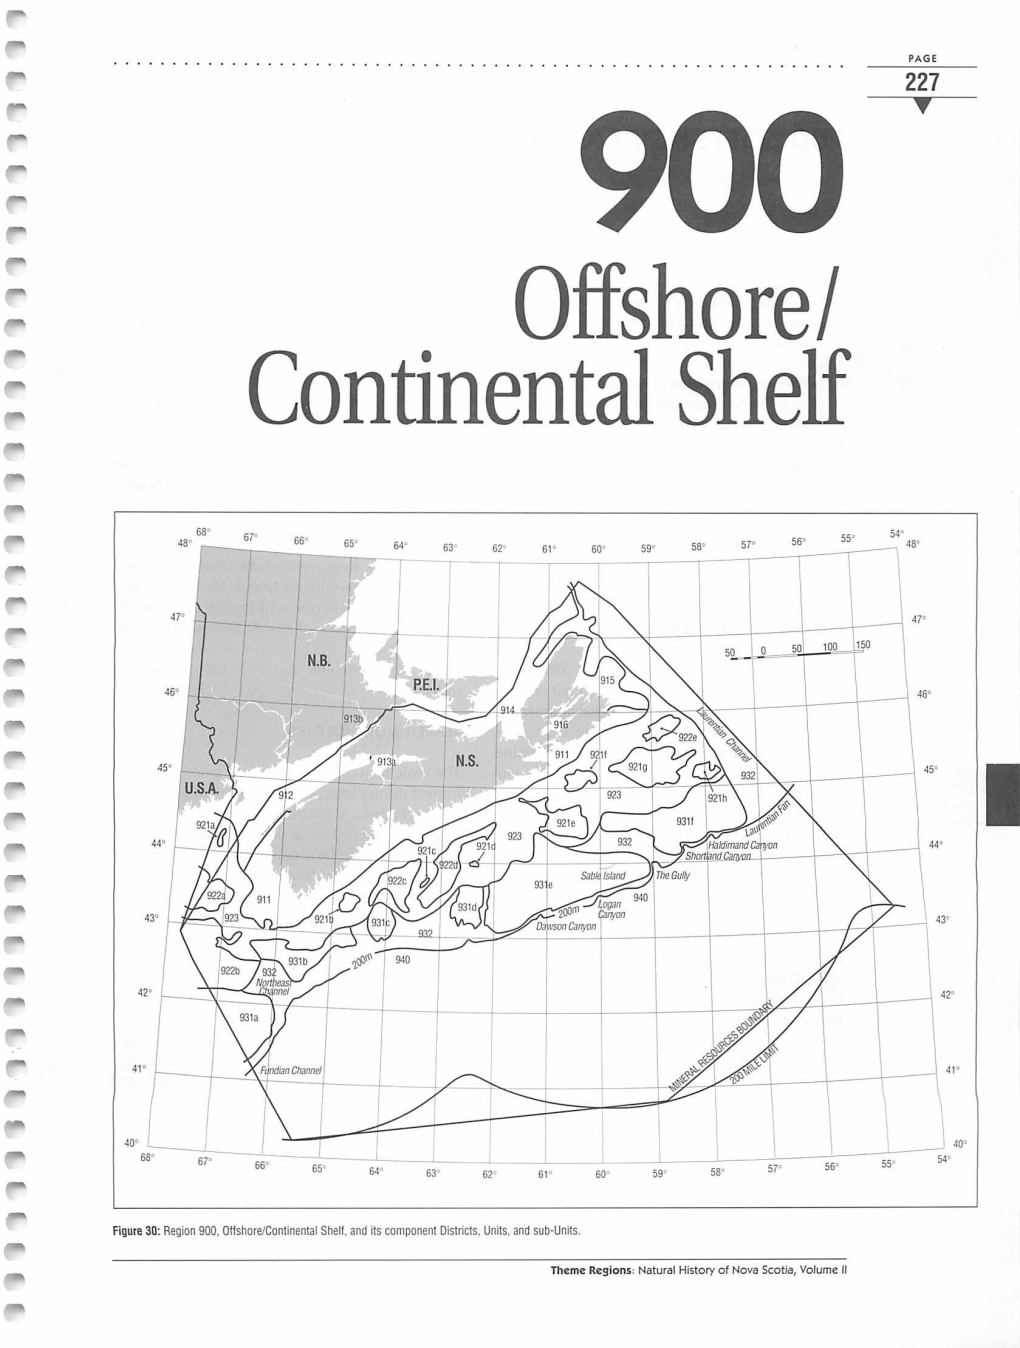 Offshore/ Continental Shelf